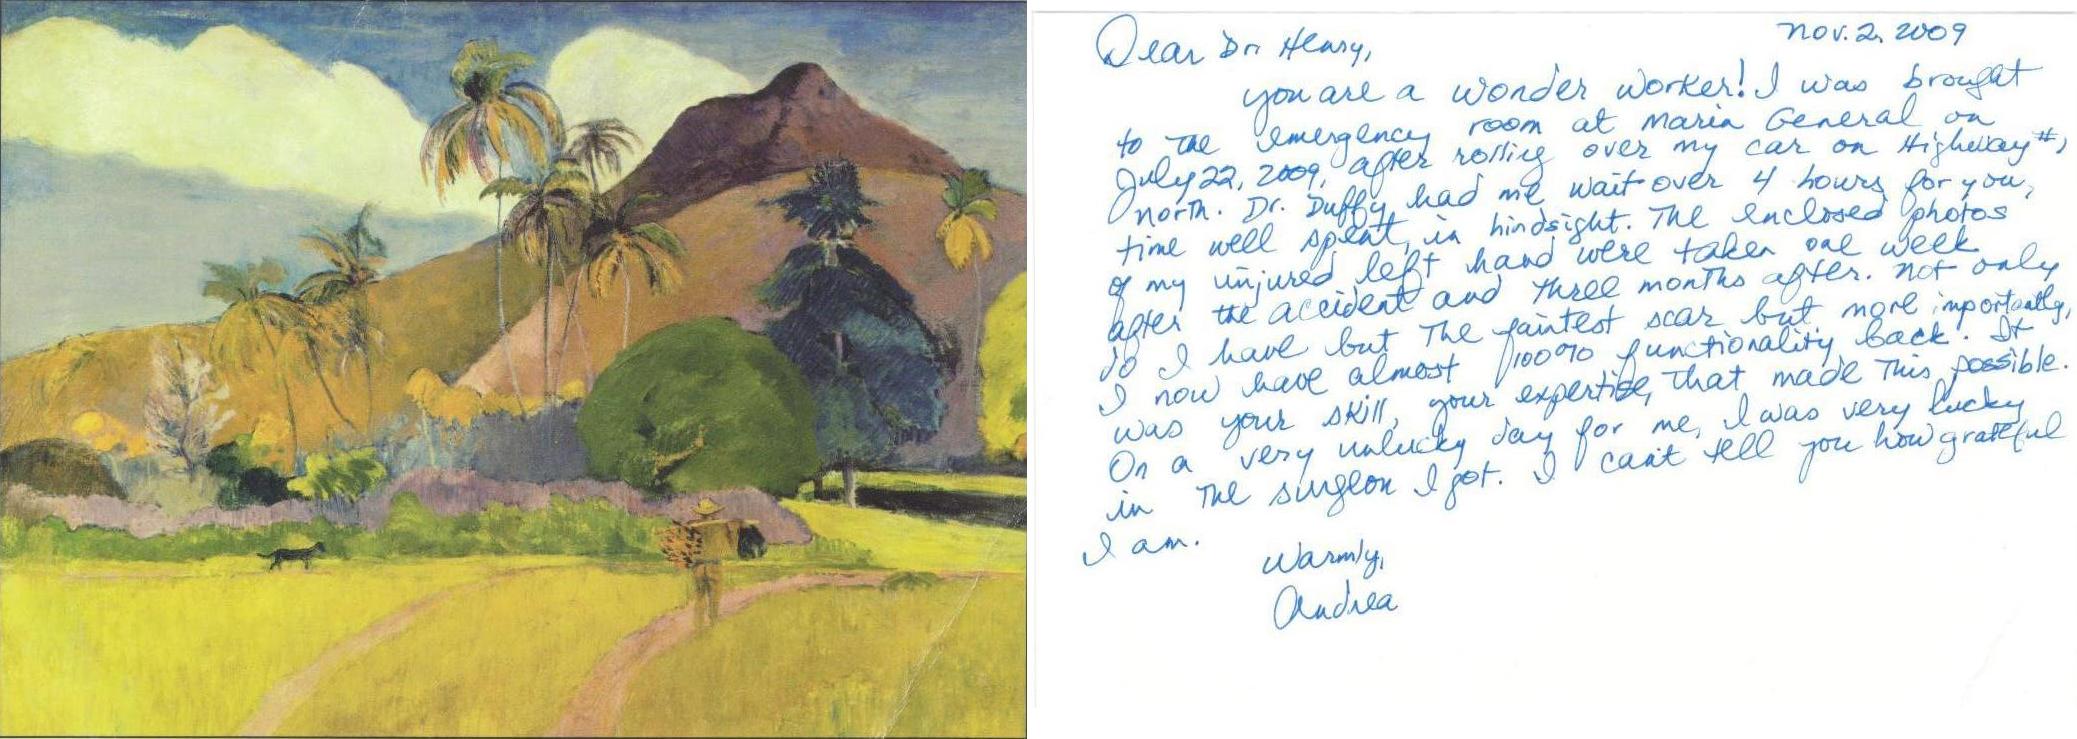 handwritten card from patient